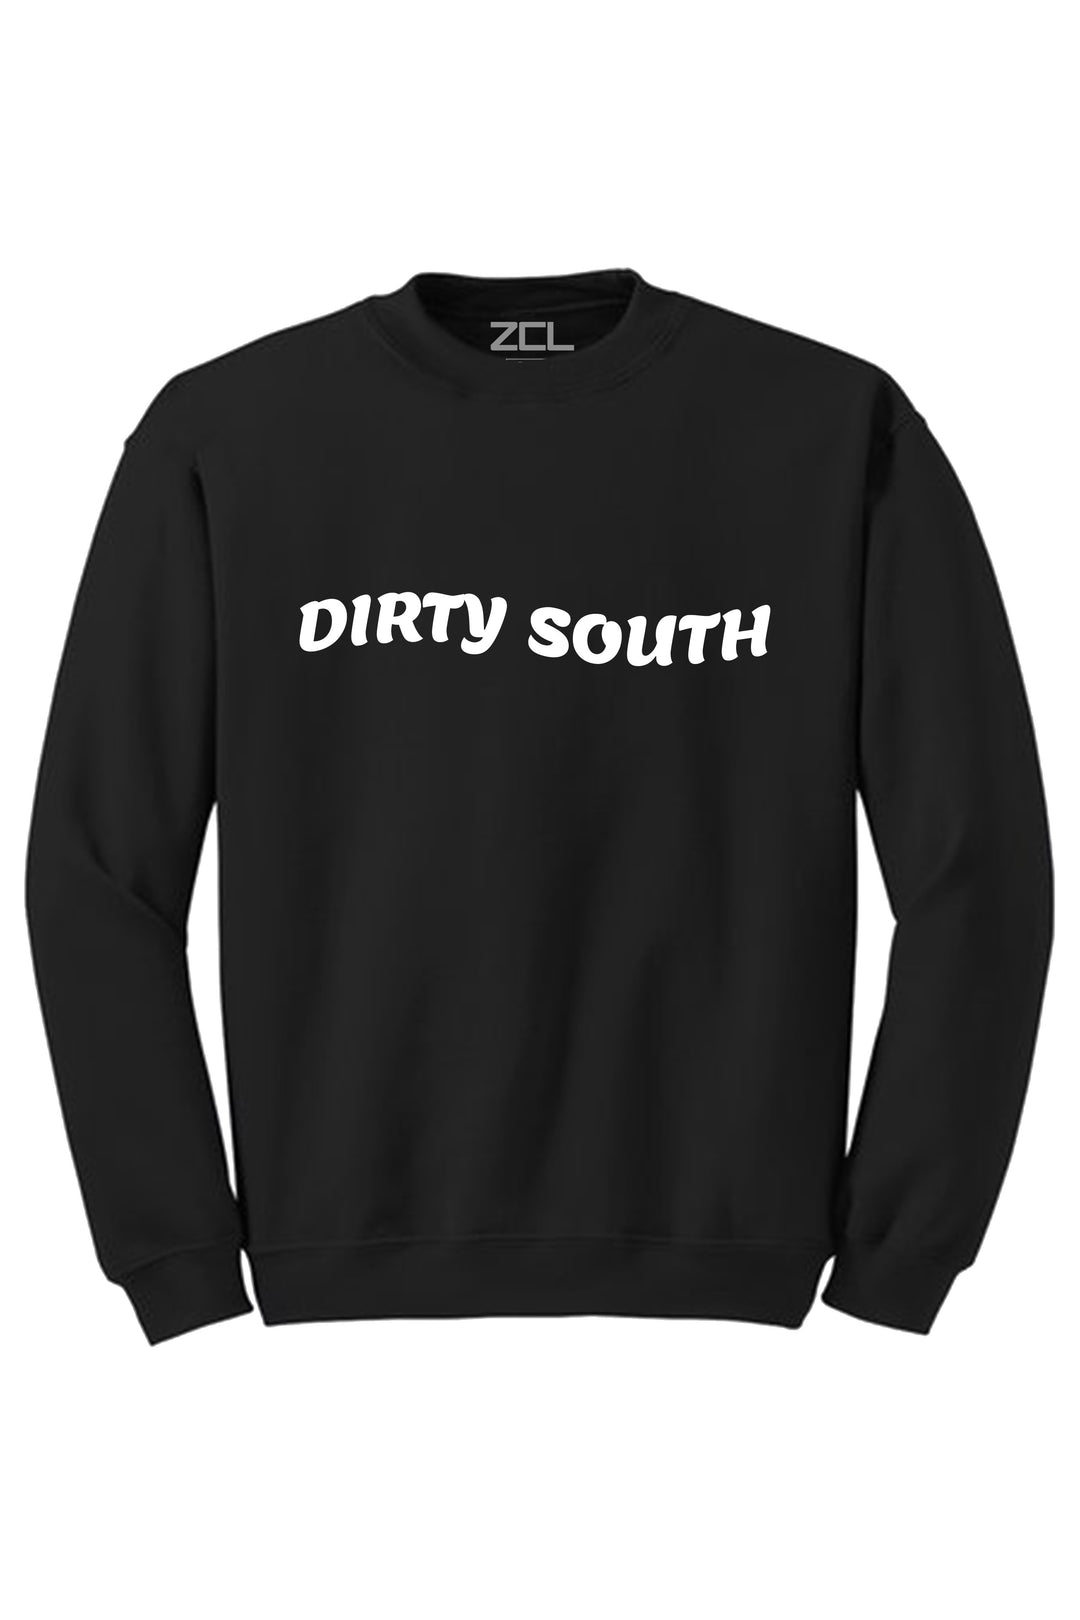 Dirty South Crewneck Sweatshirt (White Logo) - Zamage